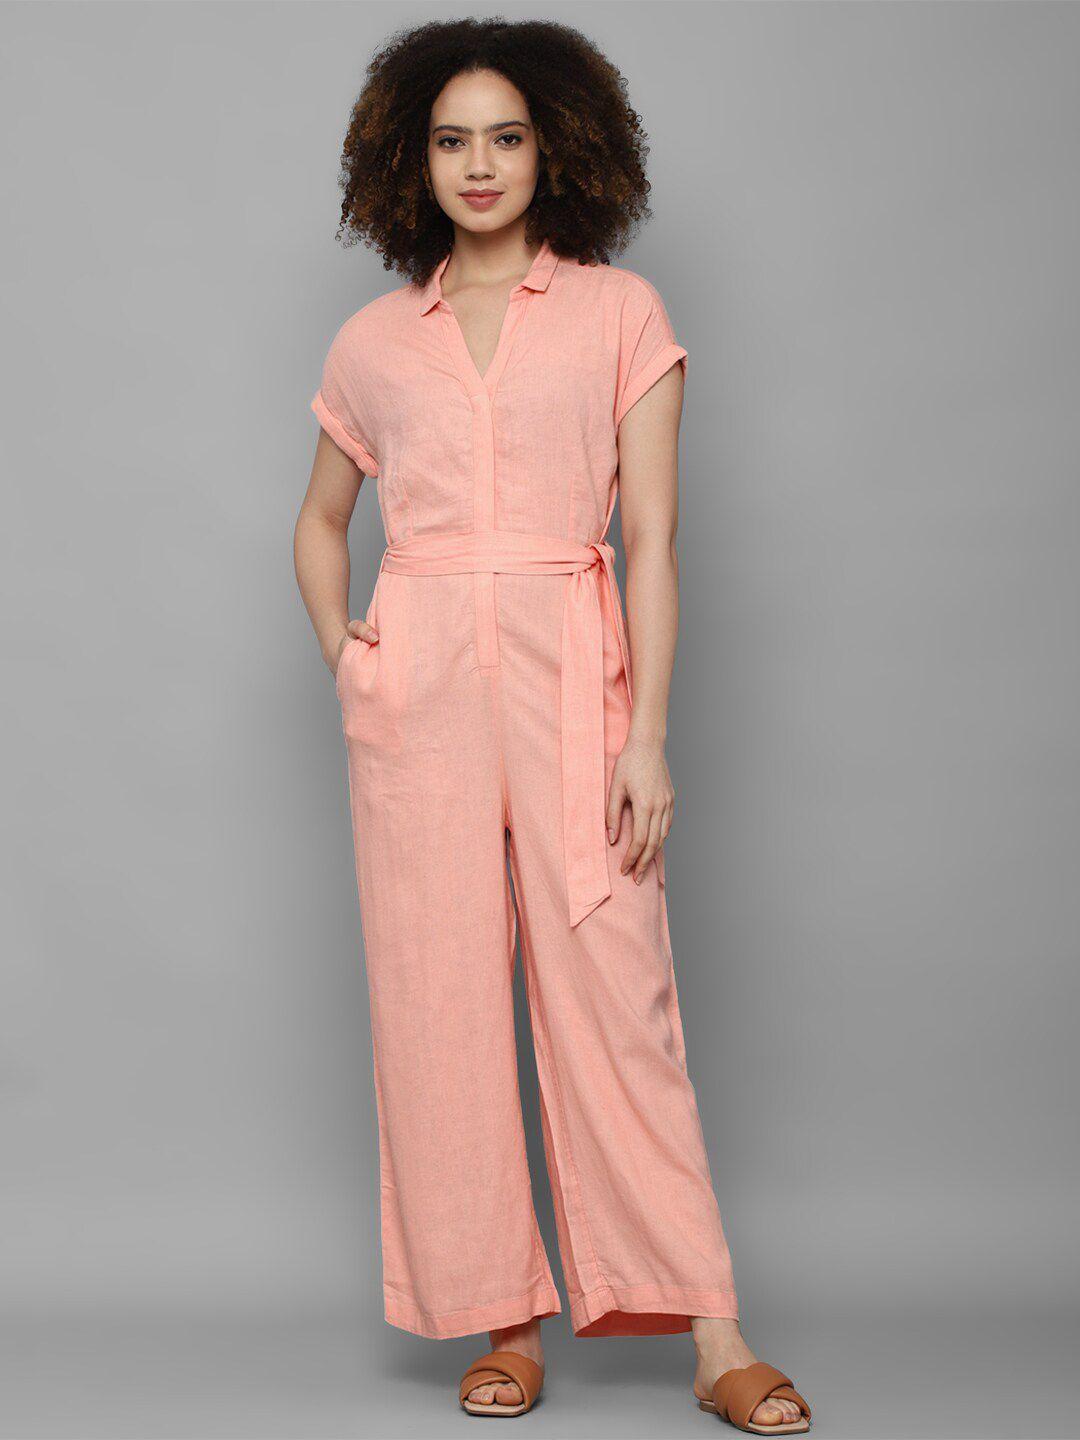 allen solly woman peach-coloured linen basic jumpsuit